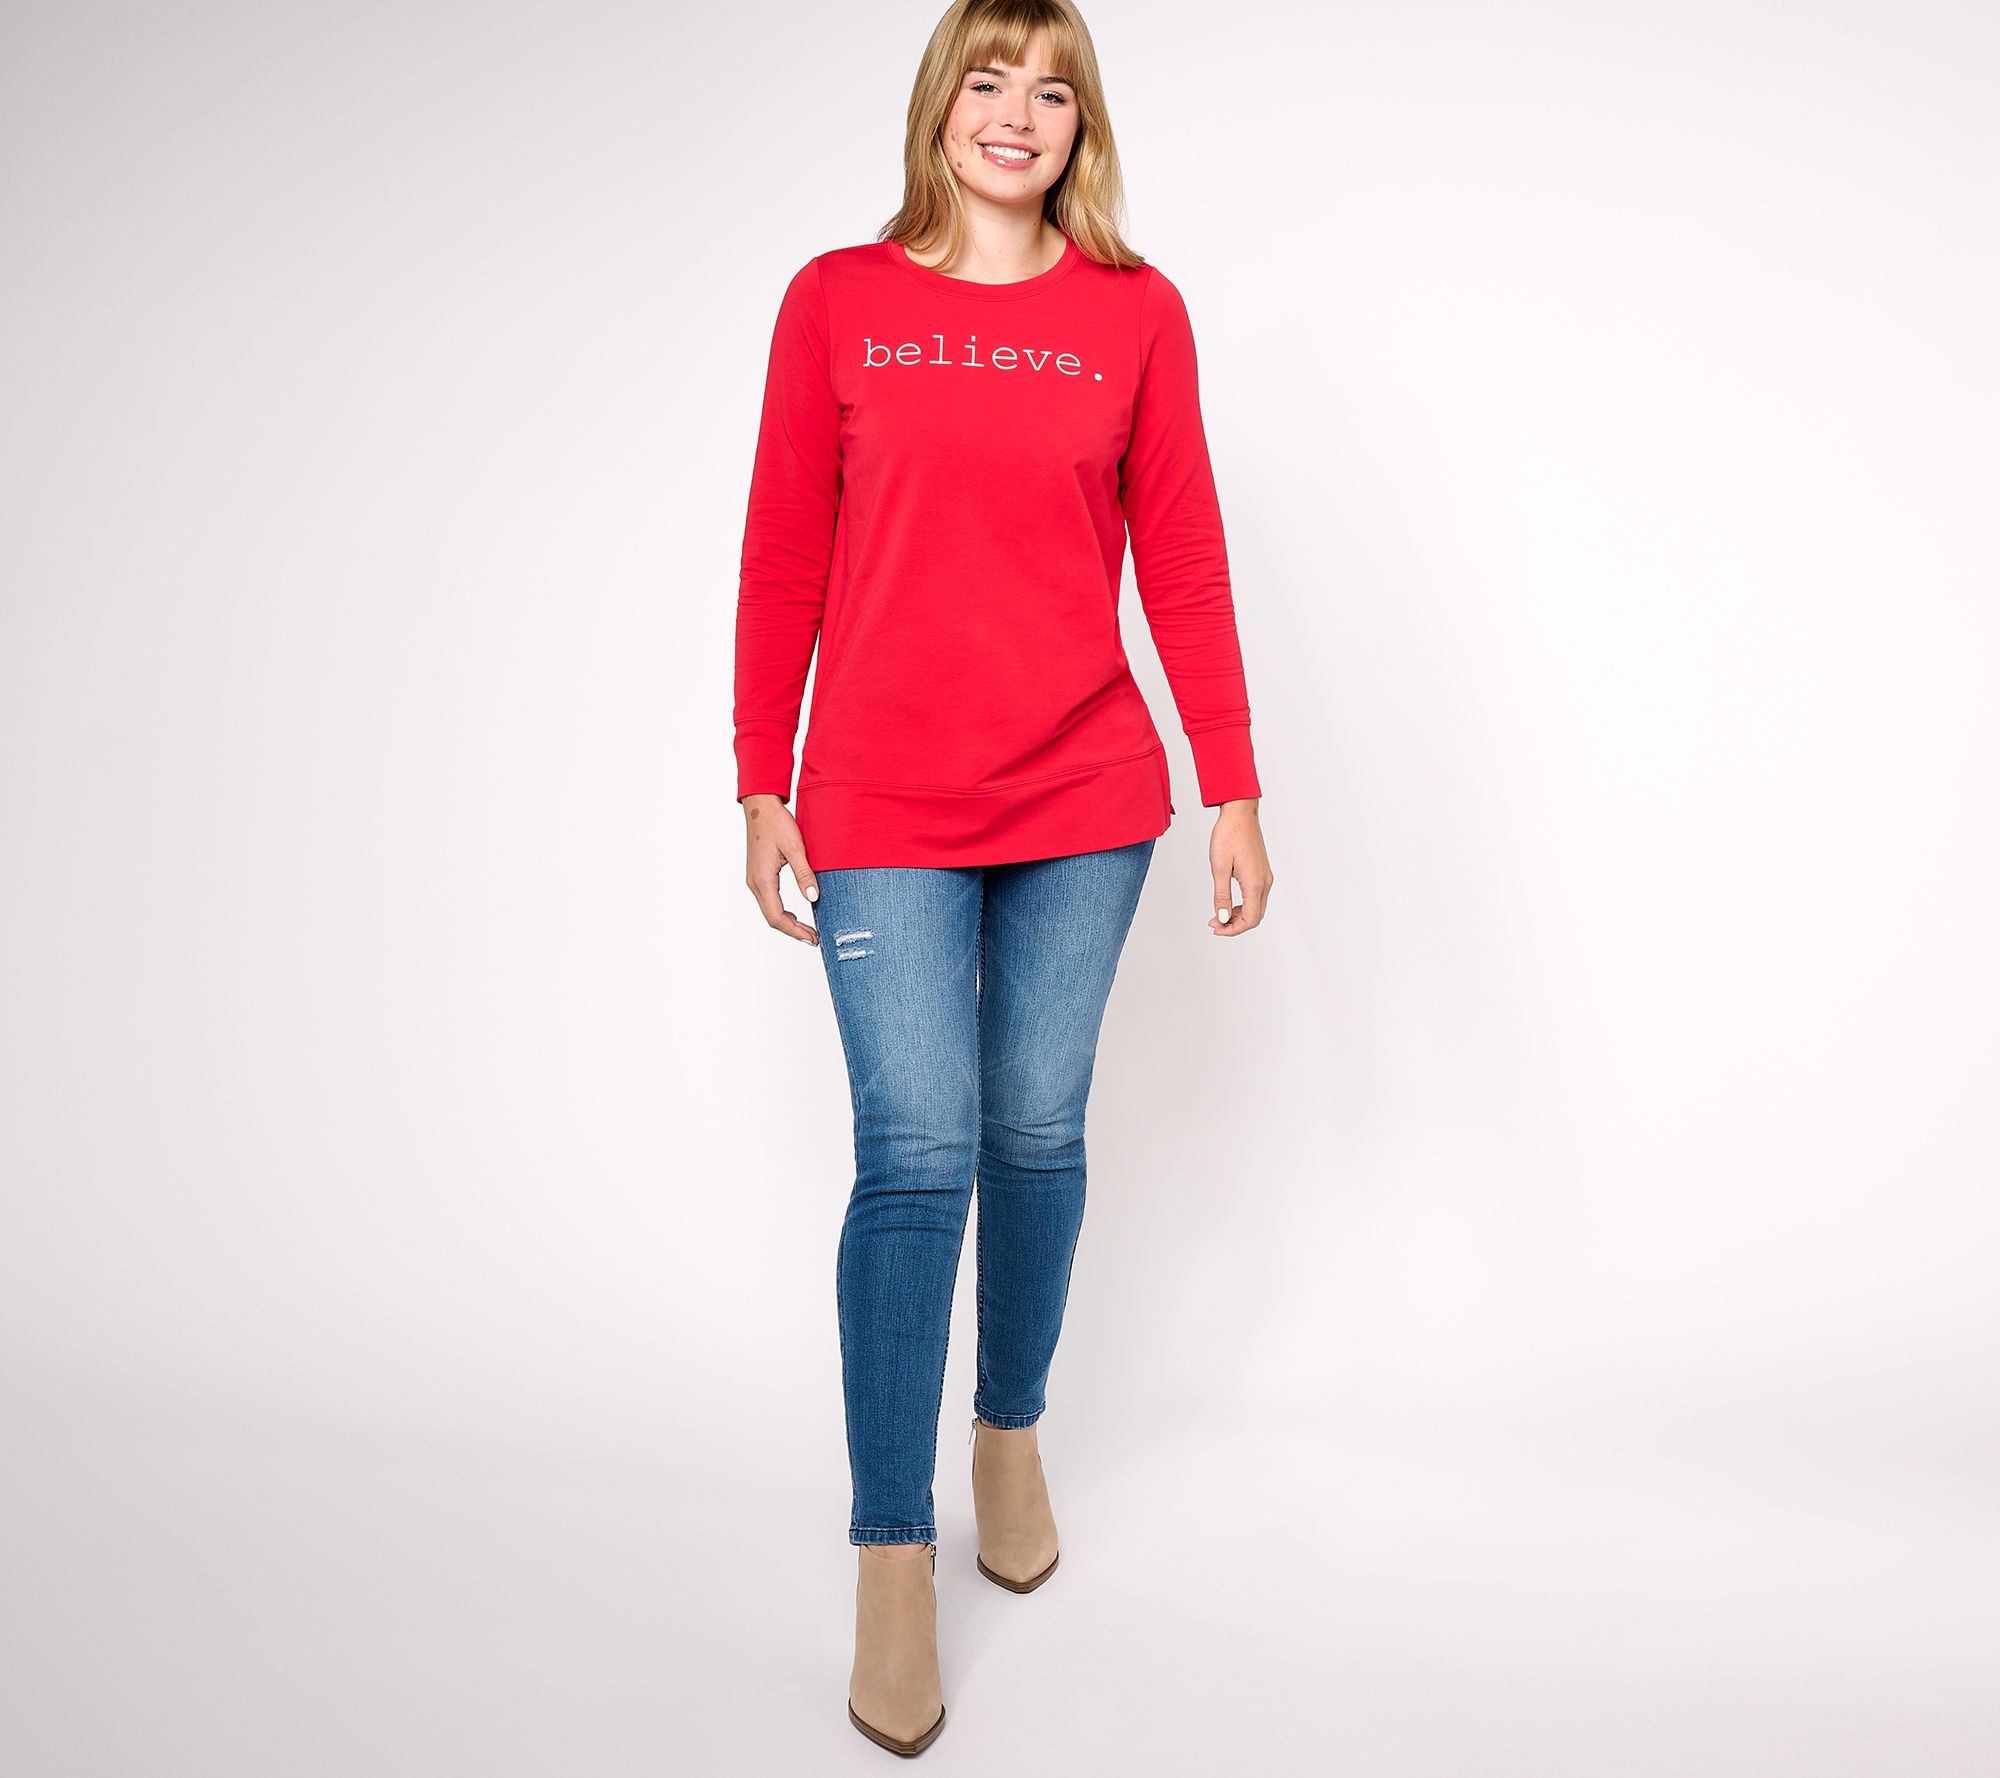 Jolly Mama T-Shirt Women -Smartprints Designs, Female XX-Large 